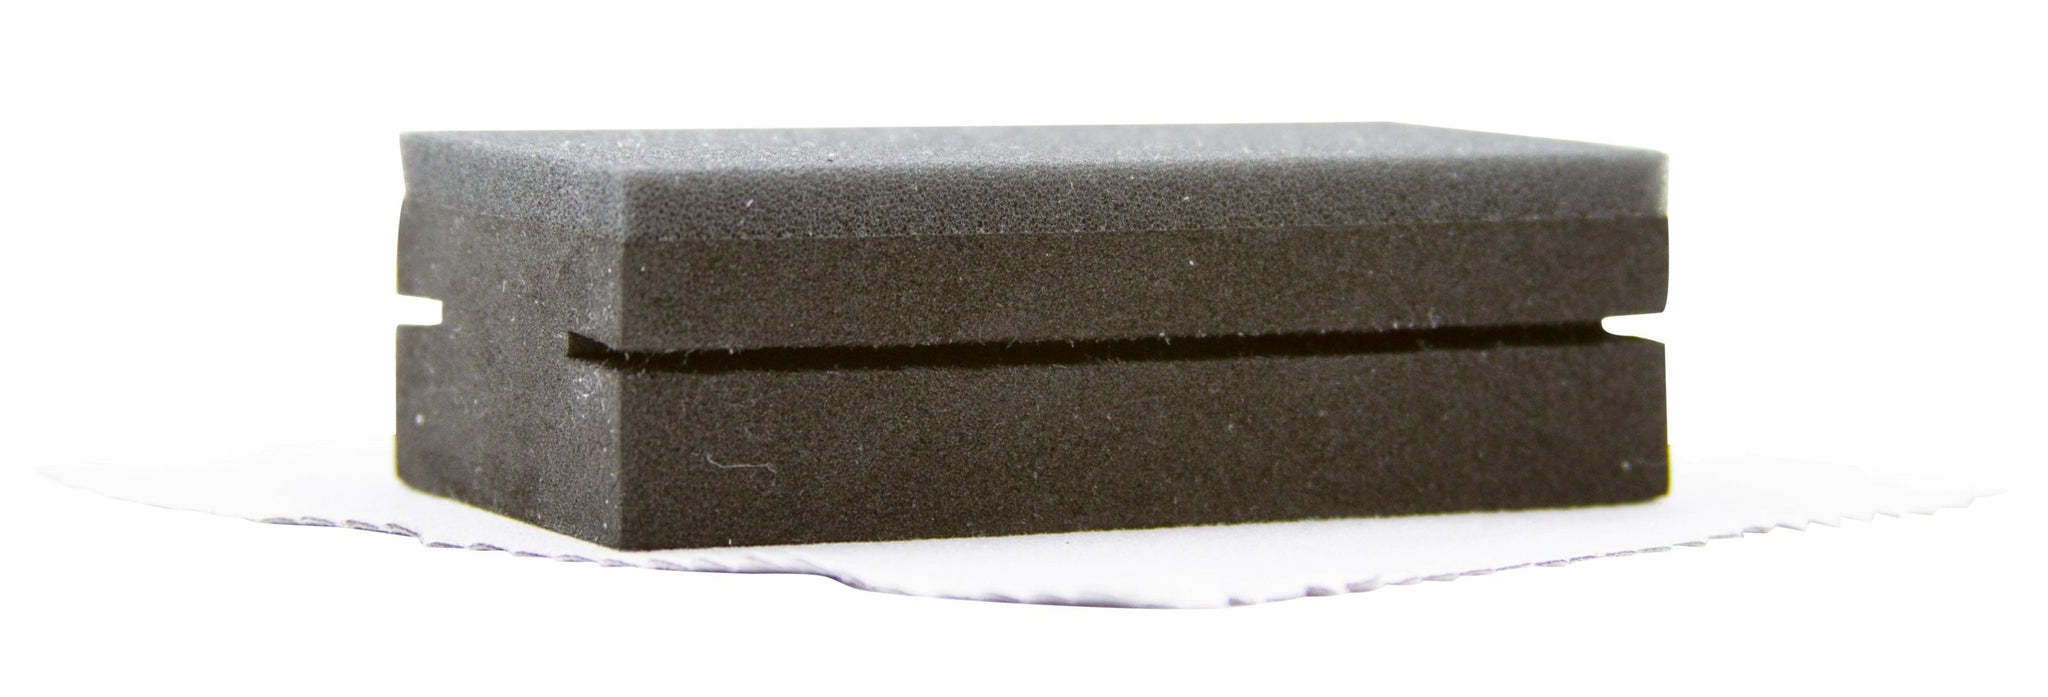 Microfiber Ultra Soft Applicator Foam Tool Sponge Block Car